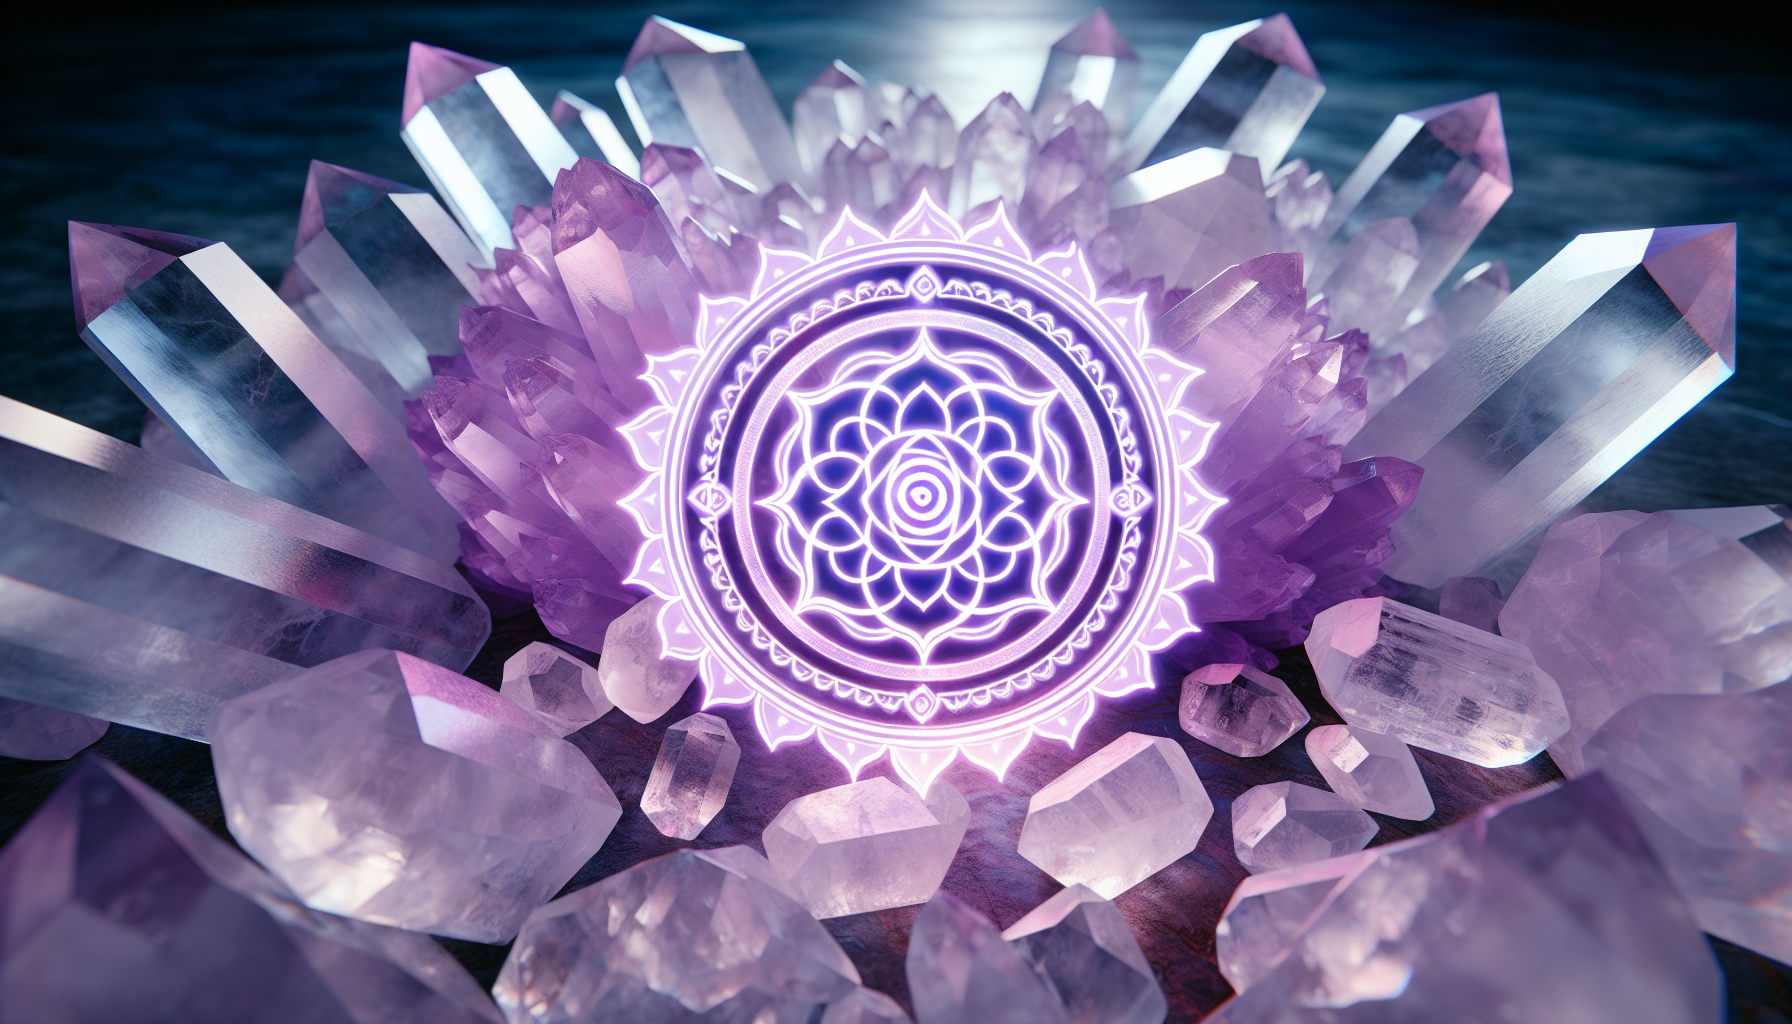 Crown chakra symbol with clear quartz